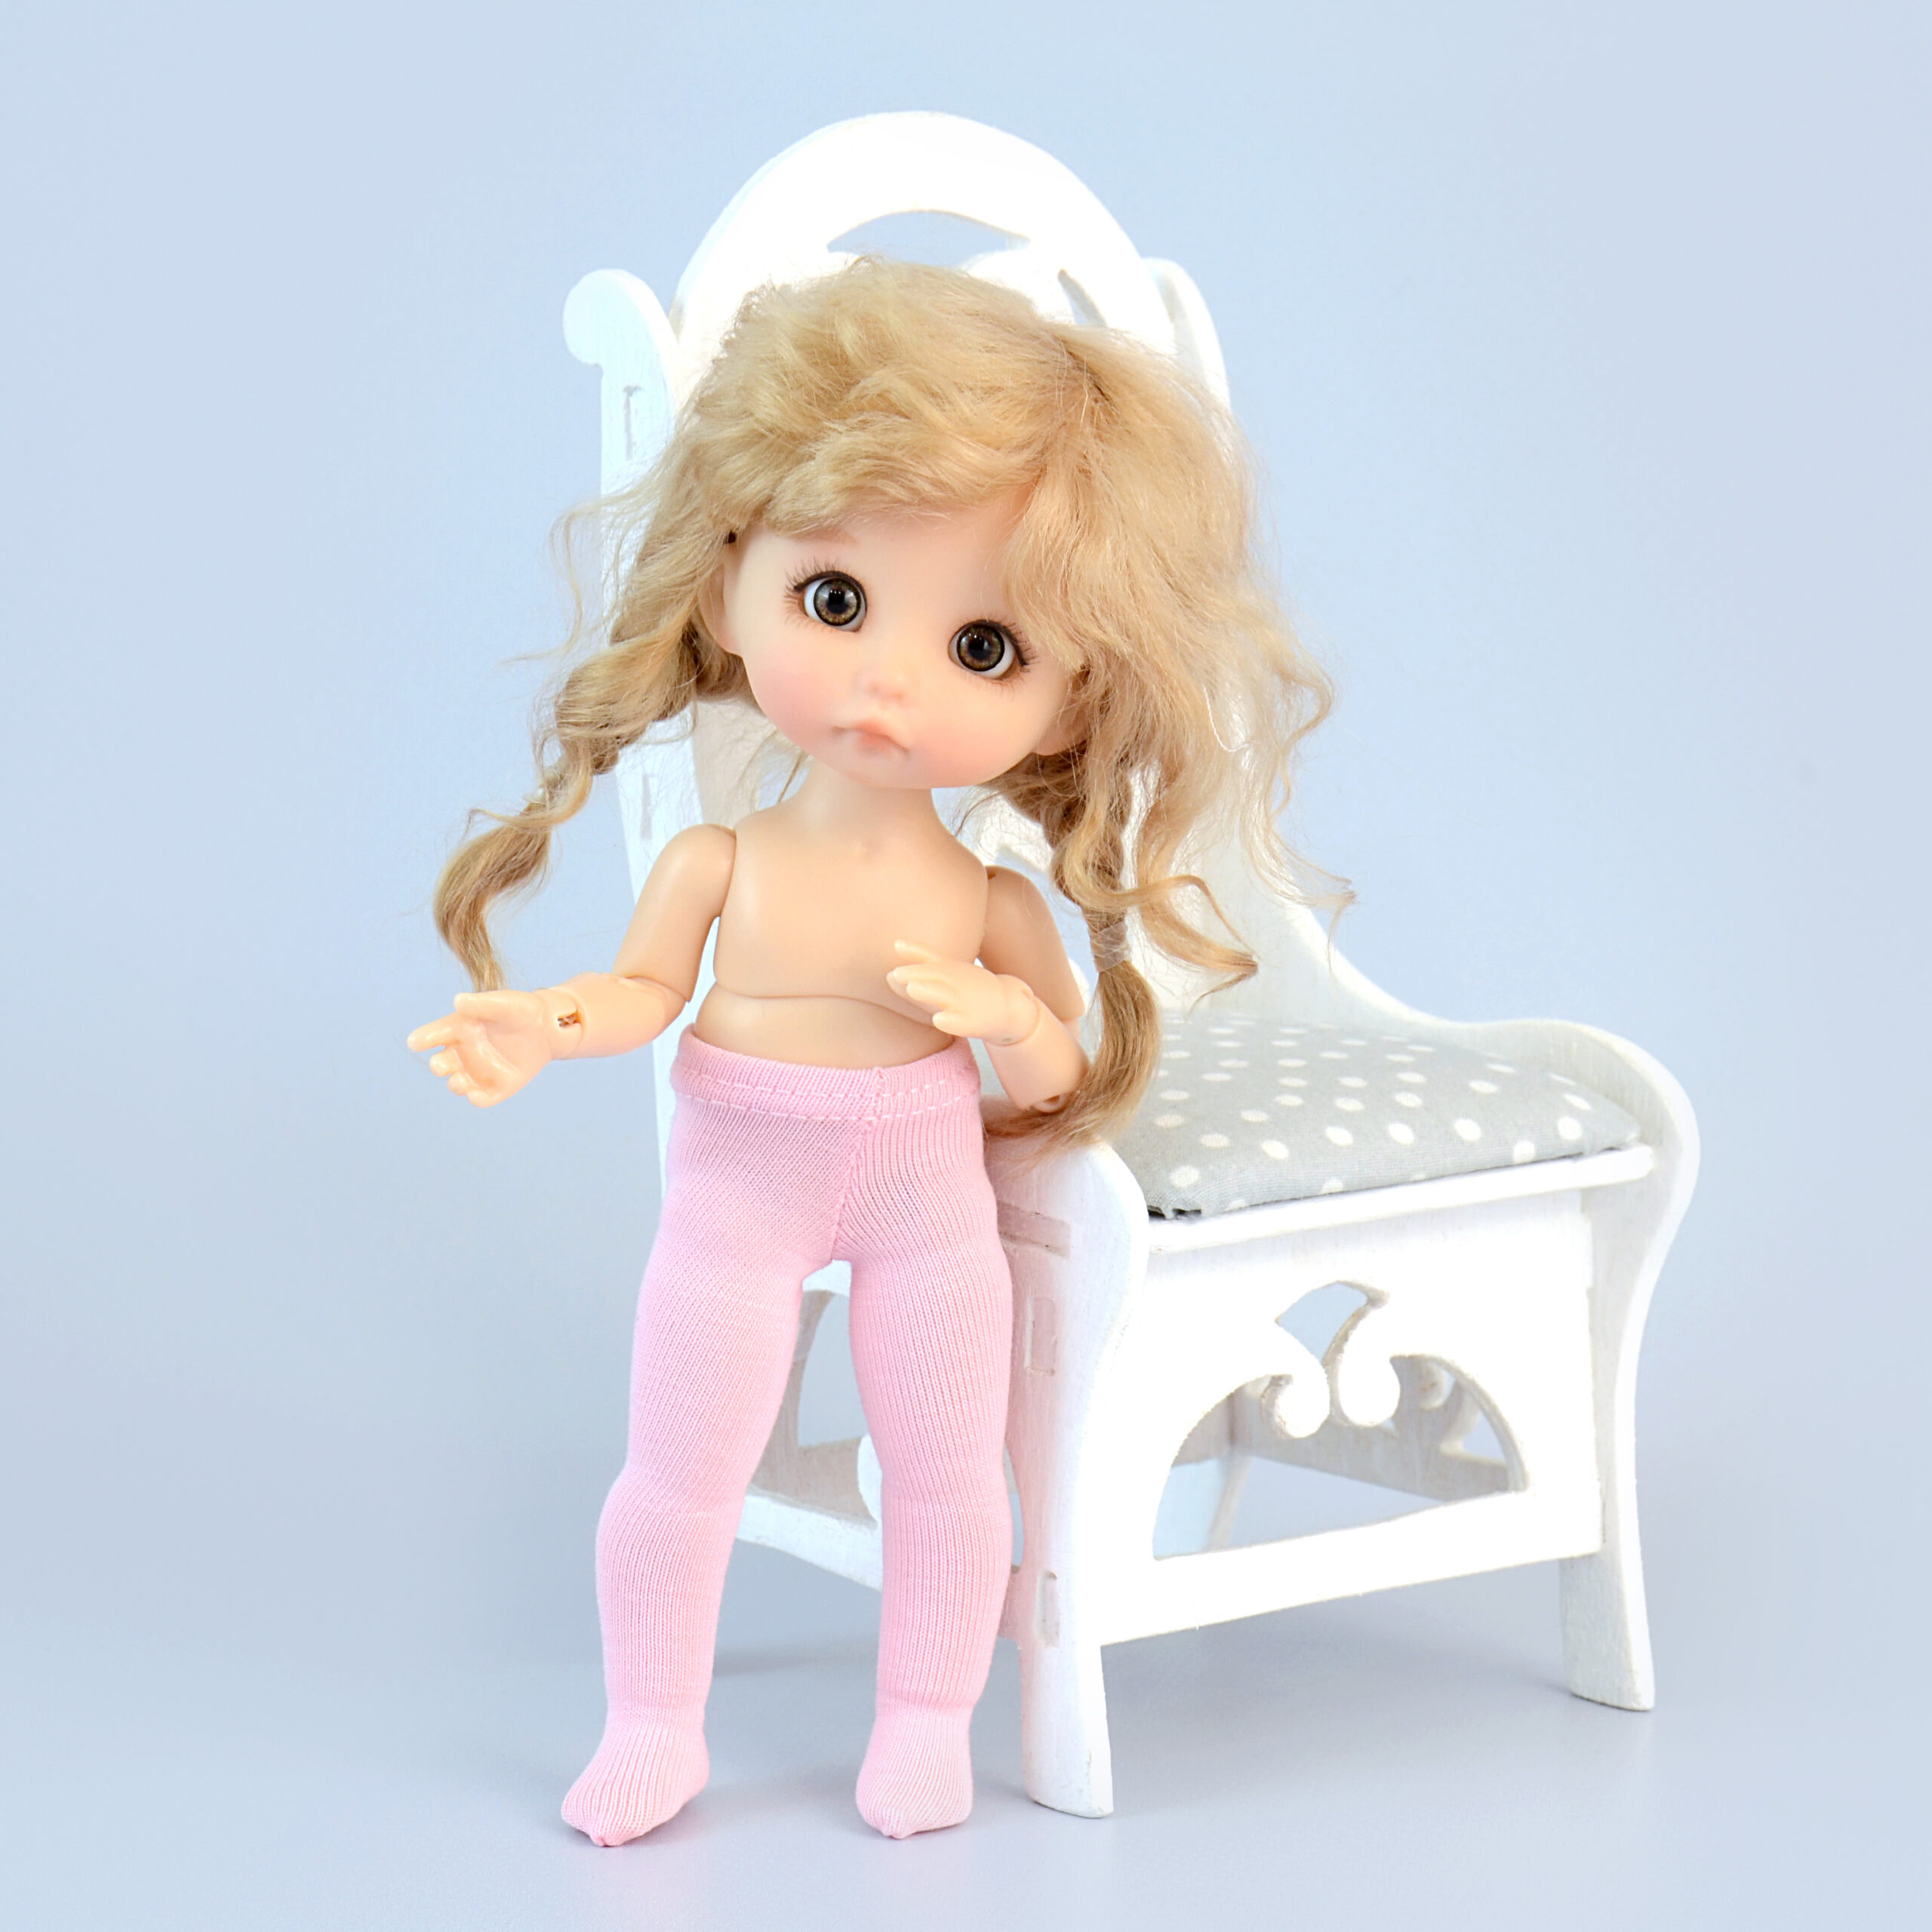 Lingerie set for Barbie - panties, bustier, stockings